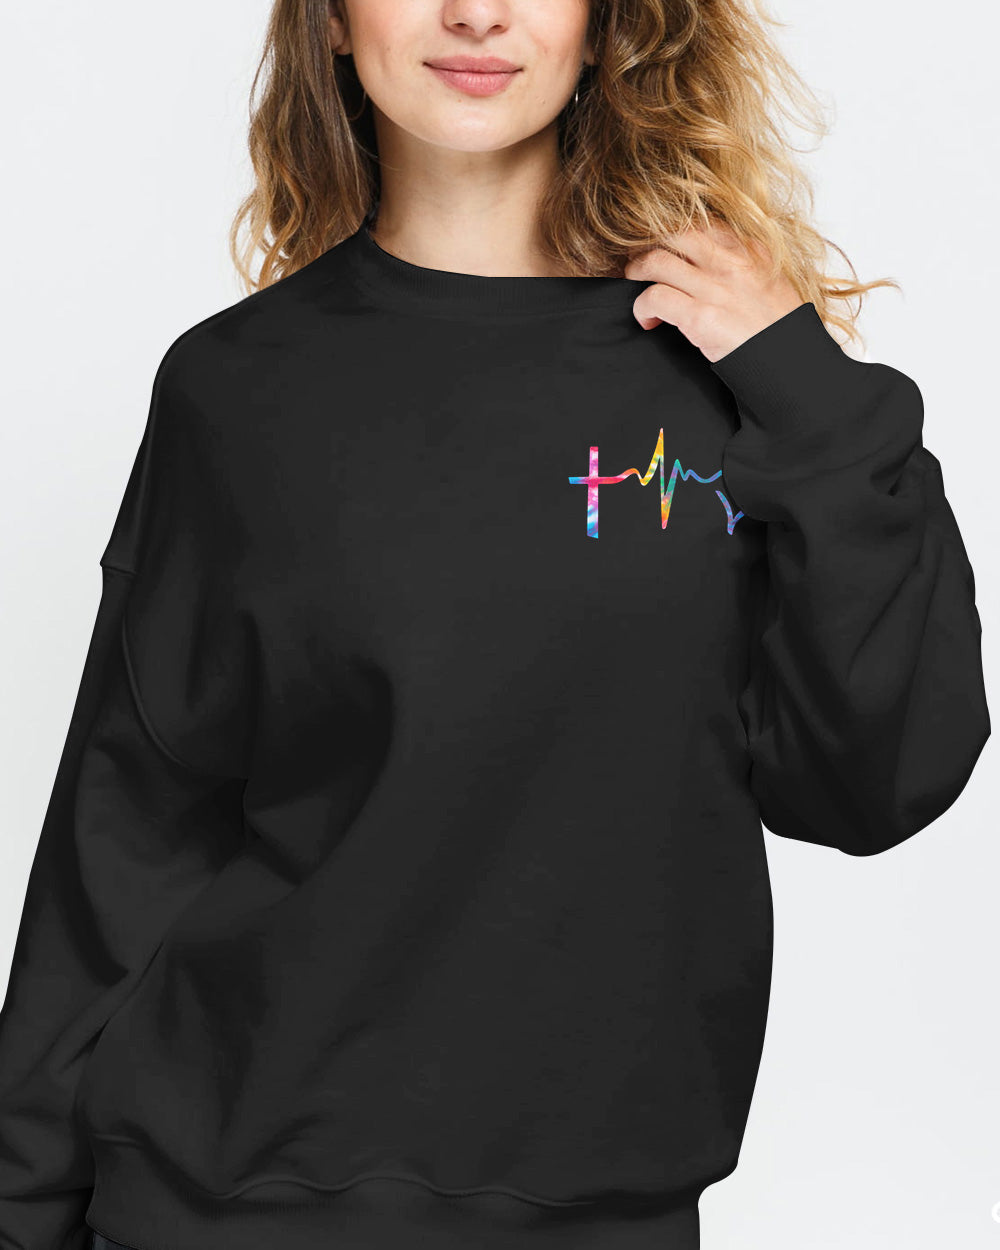 I Can Do All Thing Tie Dye Cross Half Text Women's Christian Sweatshirt